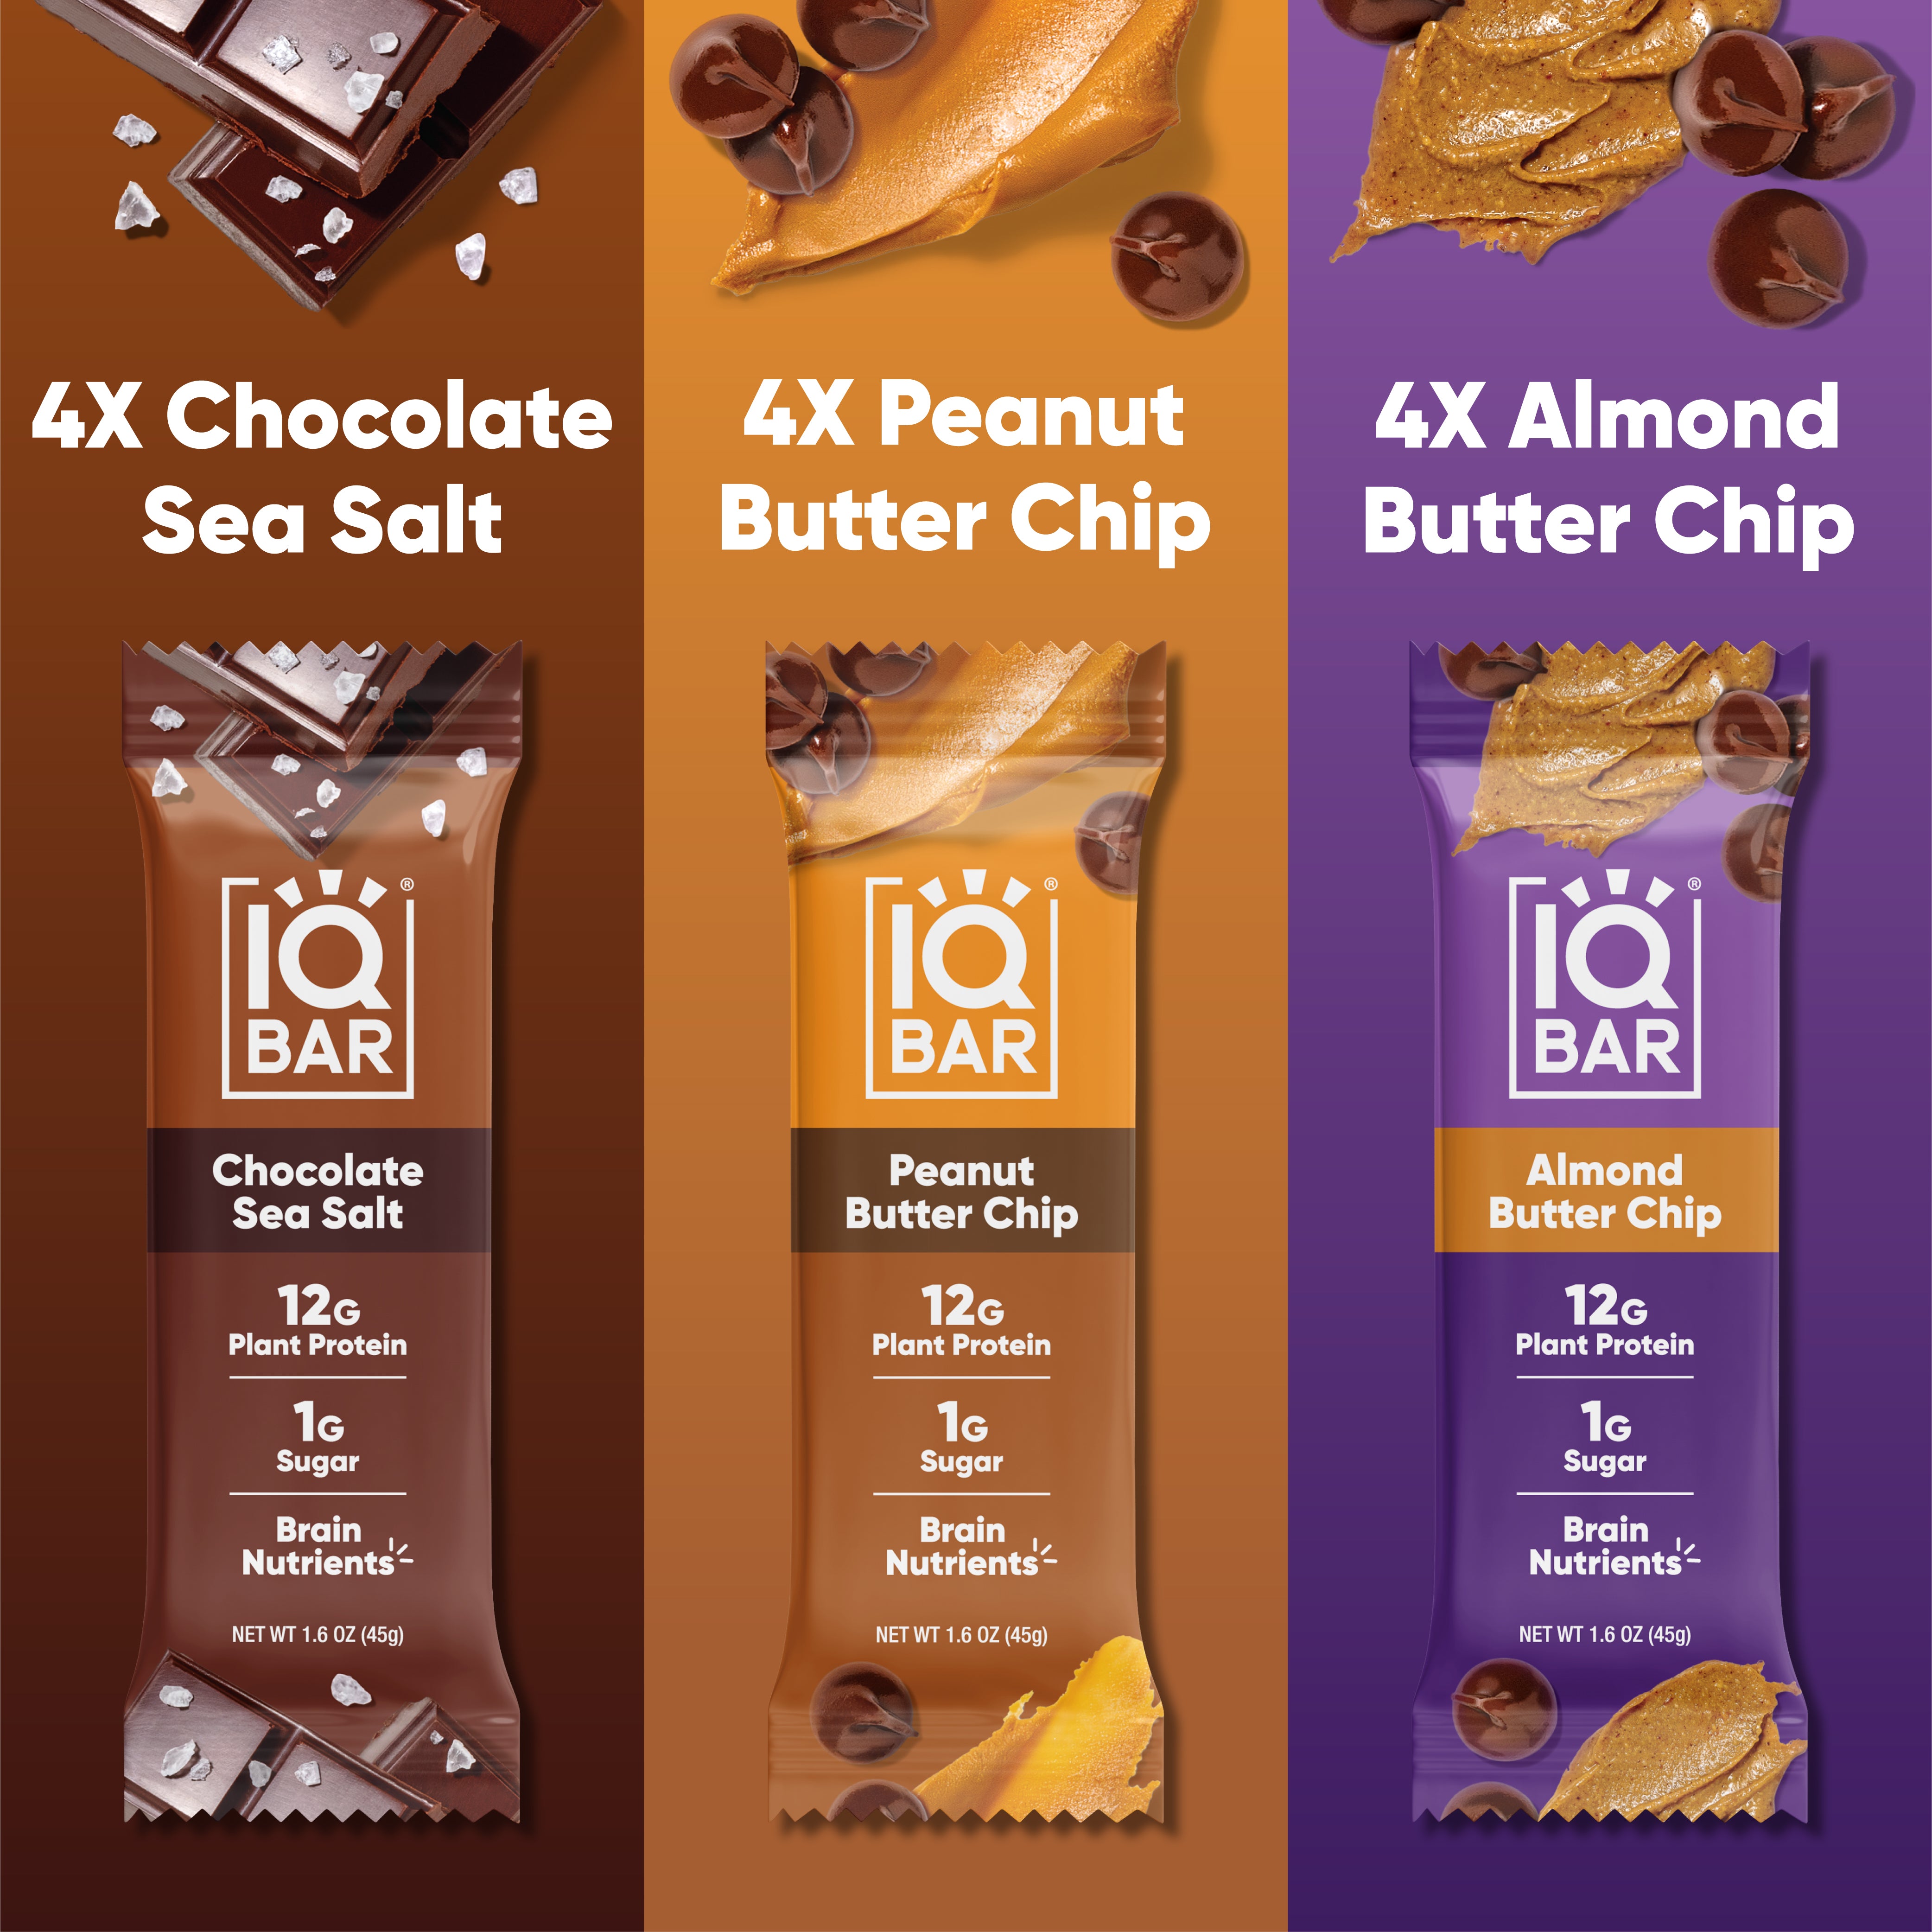 Chocolate Lovers Variety (12 Bars)